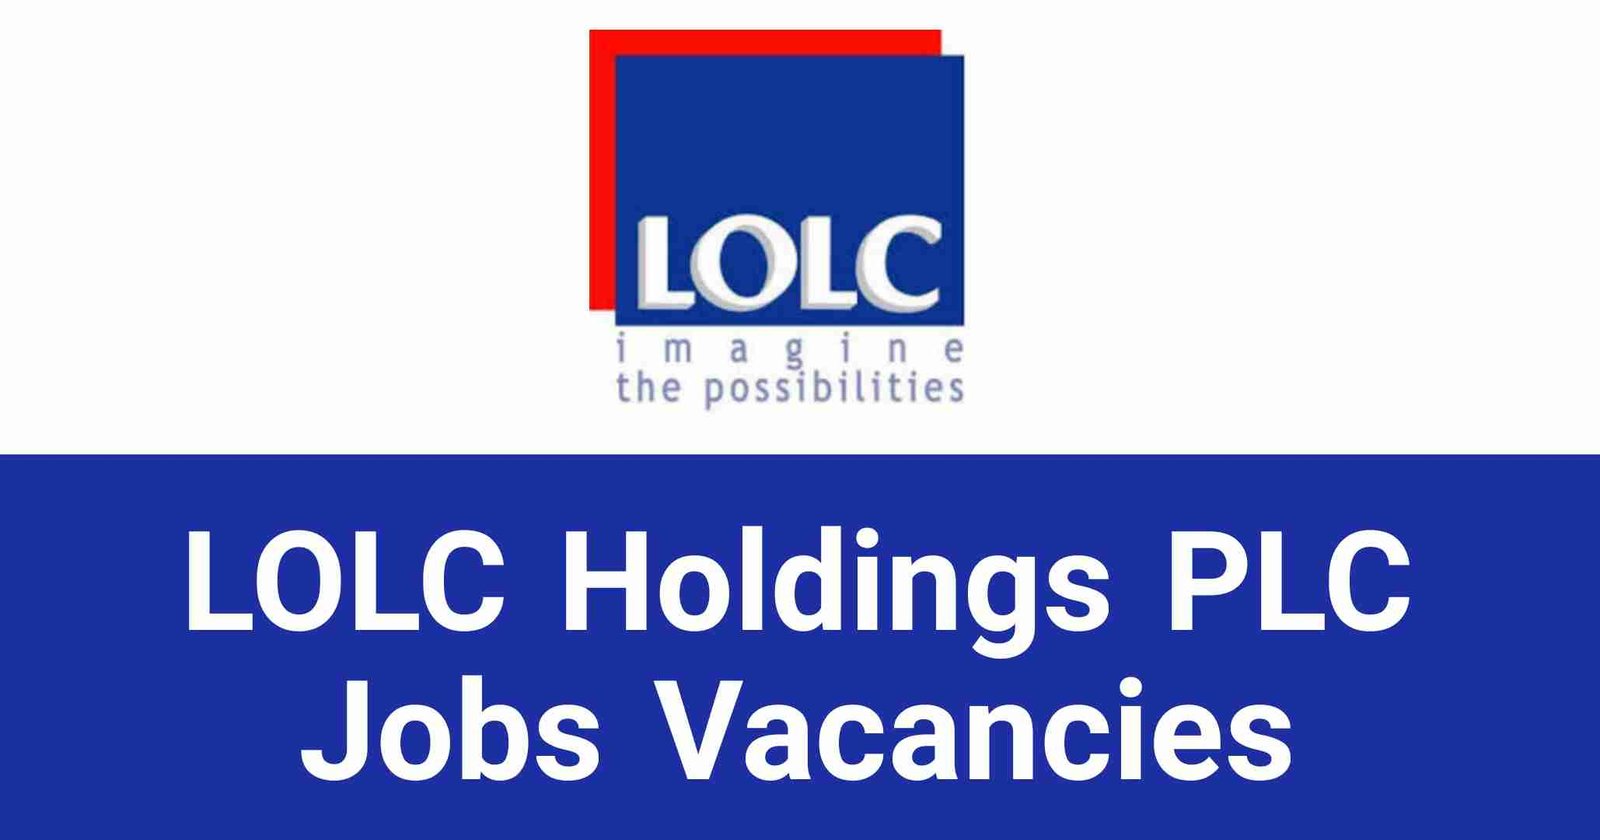 LOLC Holdings PLC Jobs Vacancies